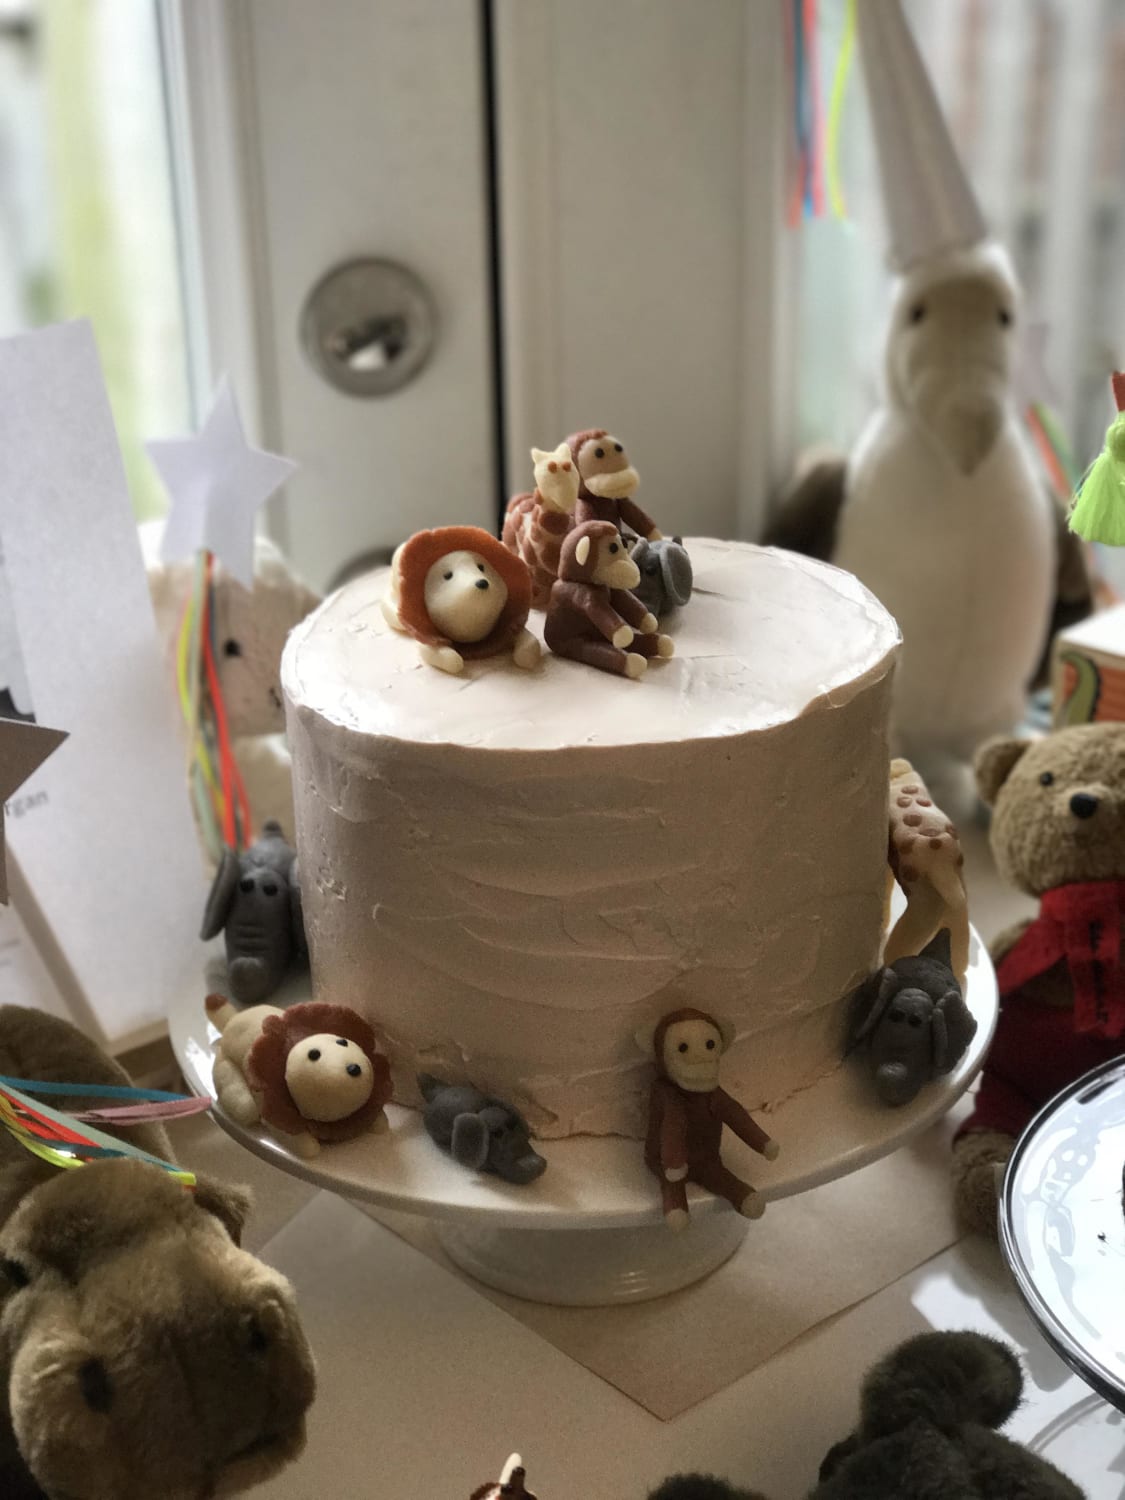 Tried my hand at Martha Stewart’s Brown Sugar Birthday Cake with hand made Marzipan Animal Figures.